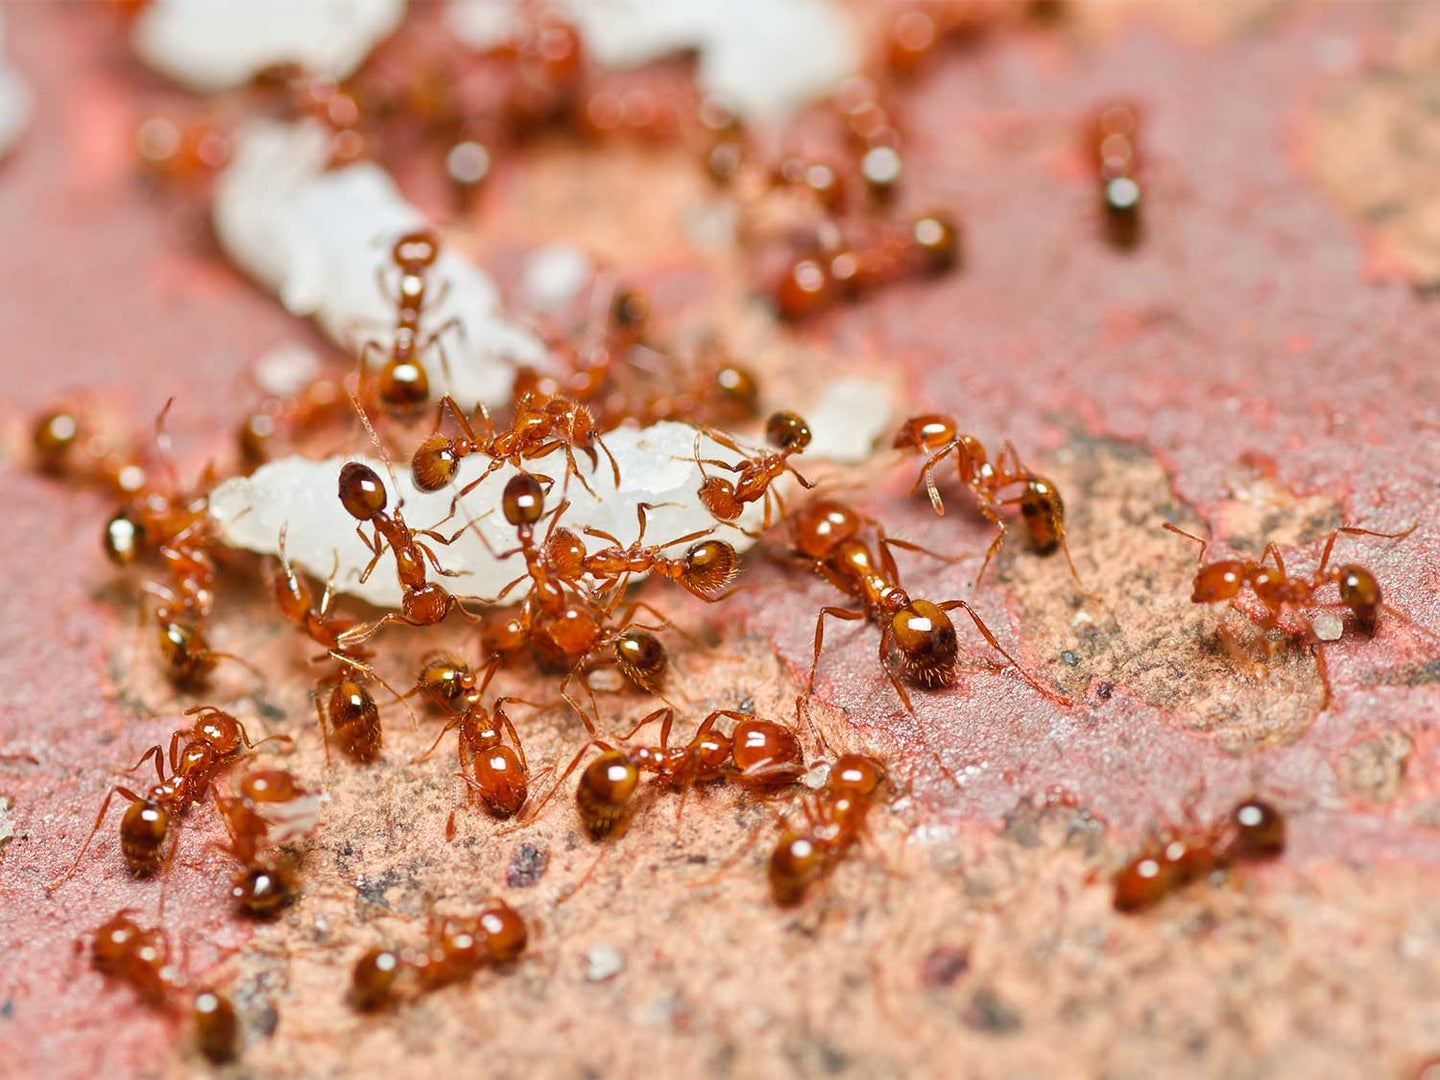 Ants Control 